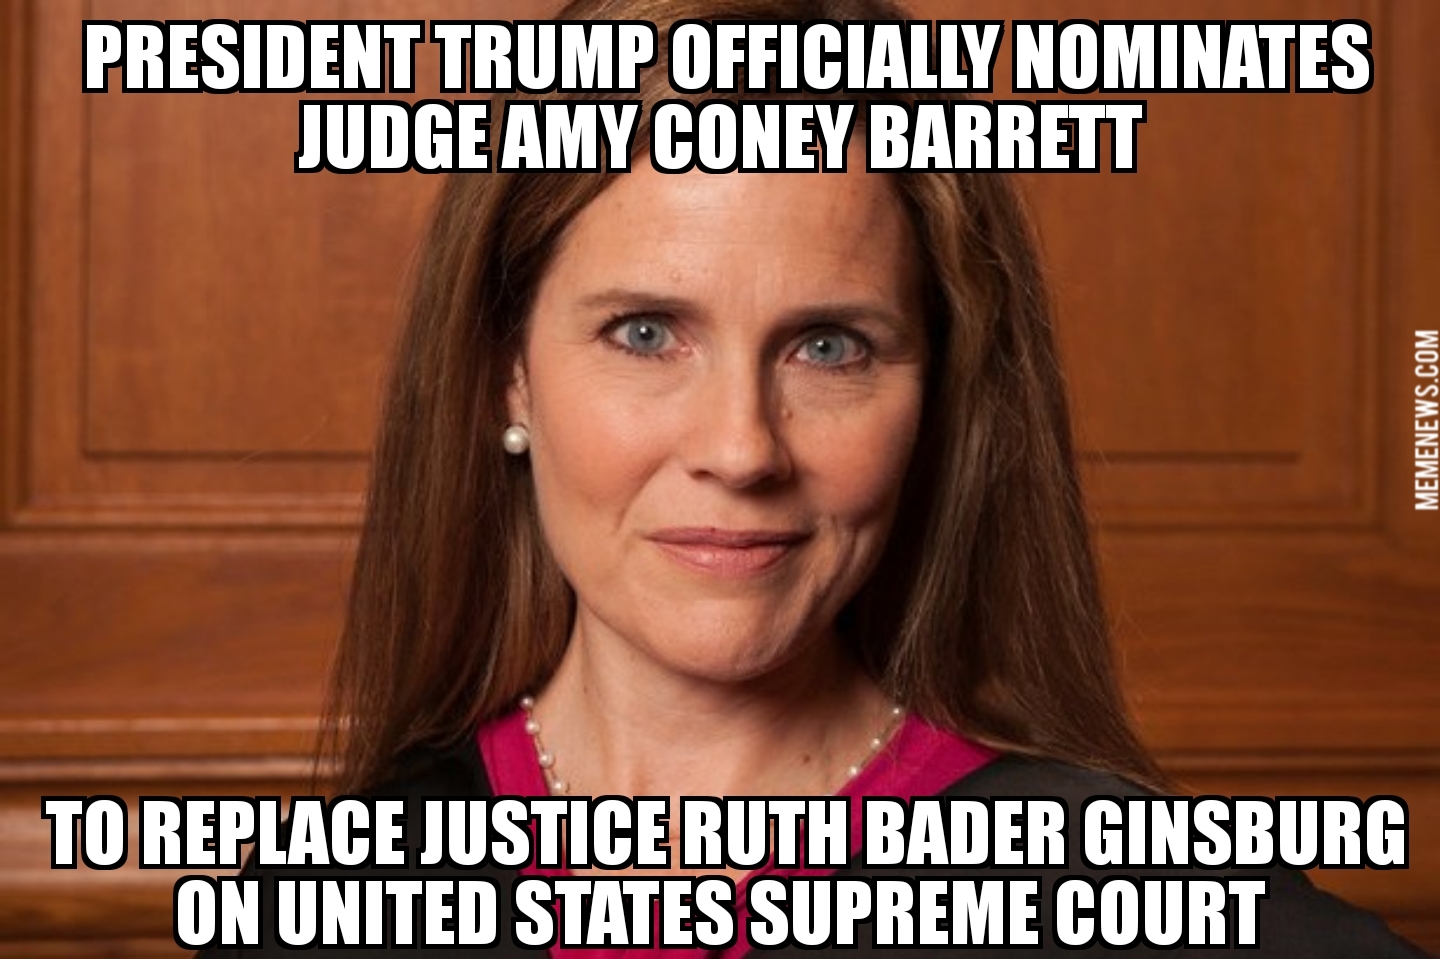 Trump nominates Amy Coney Barrett to replace Ruth Bader Ginsburg